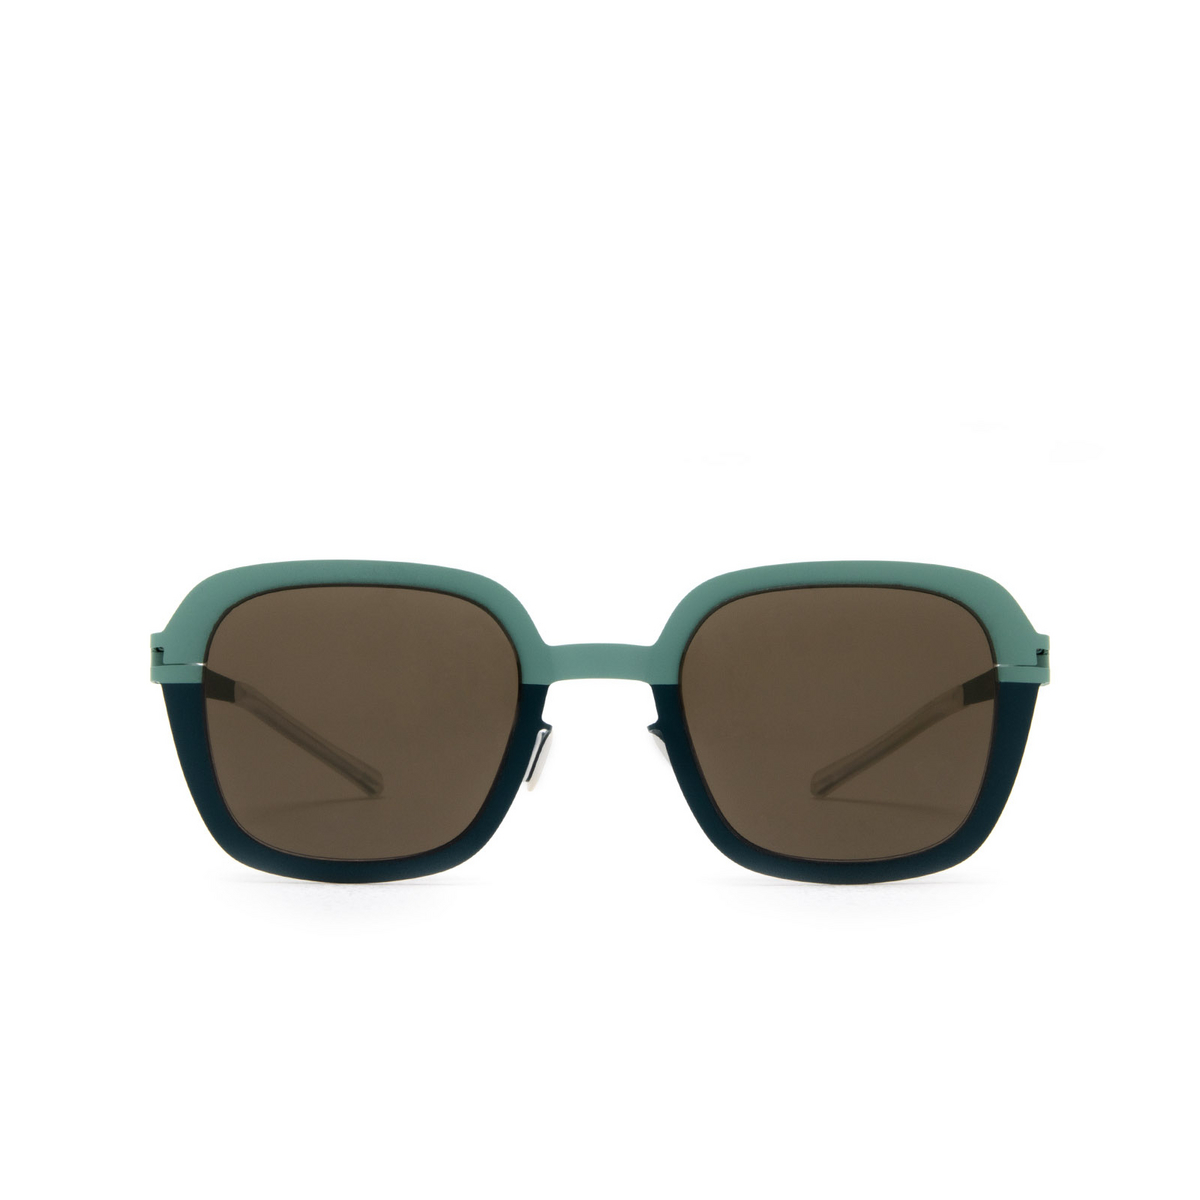 Mykita PALOMA Sunglasses 605 Green/Lagoon Green - front view